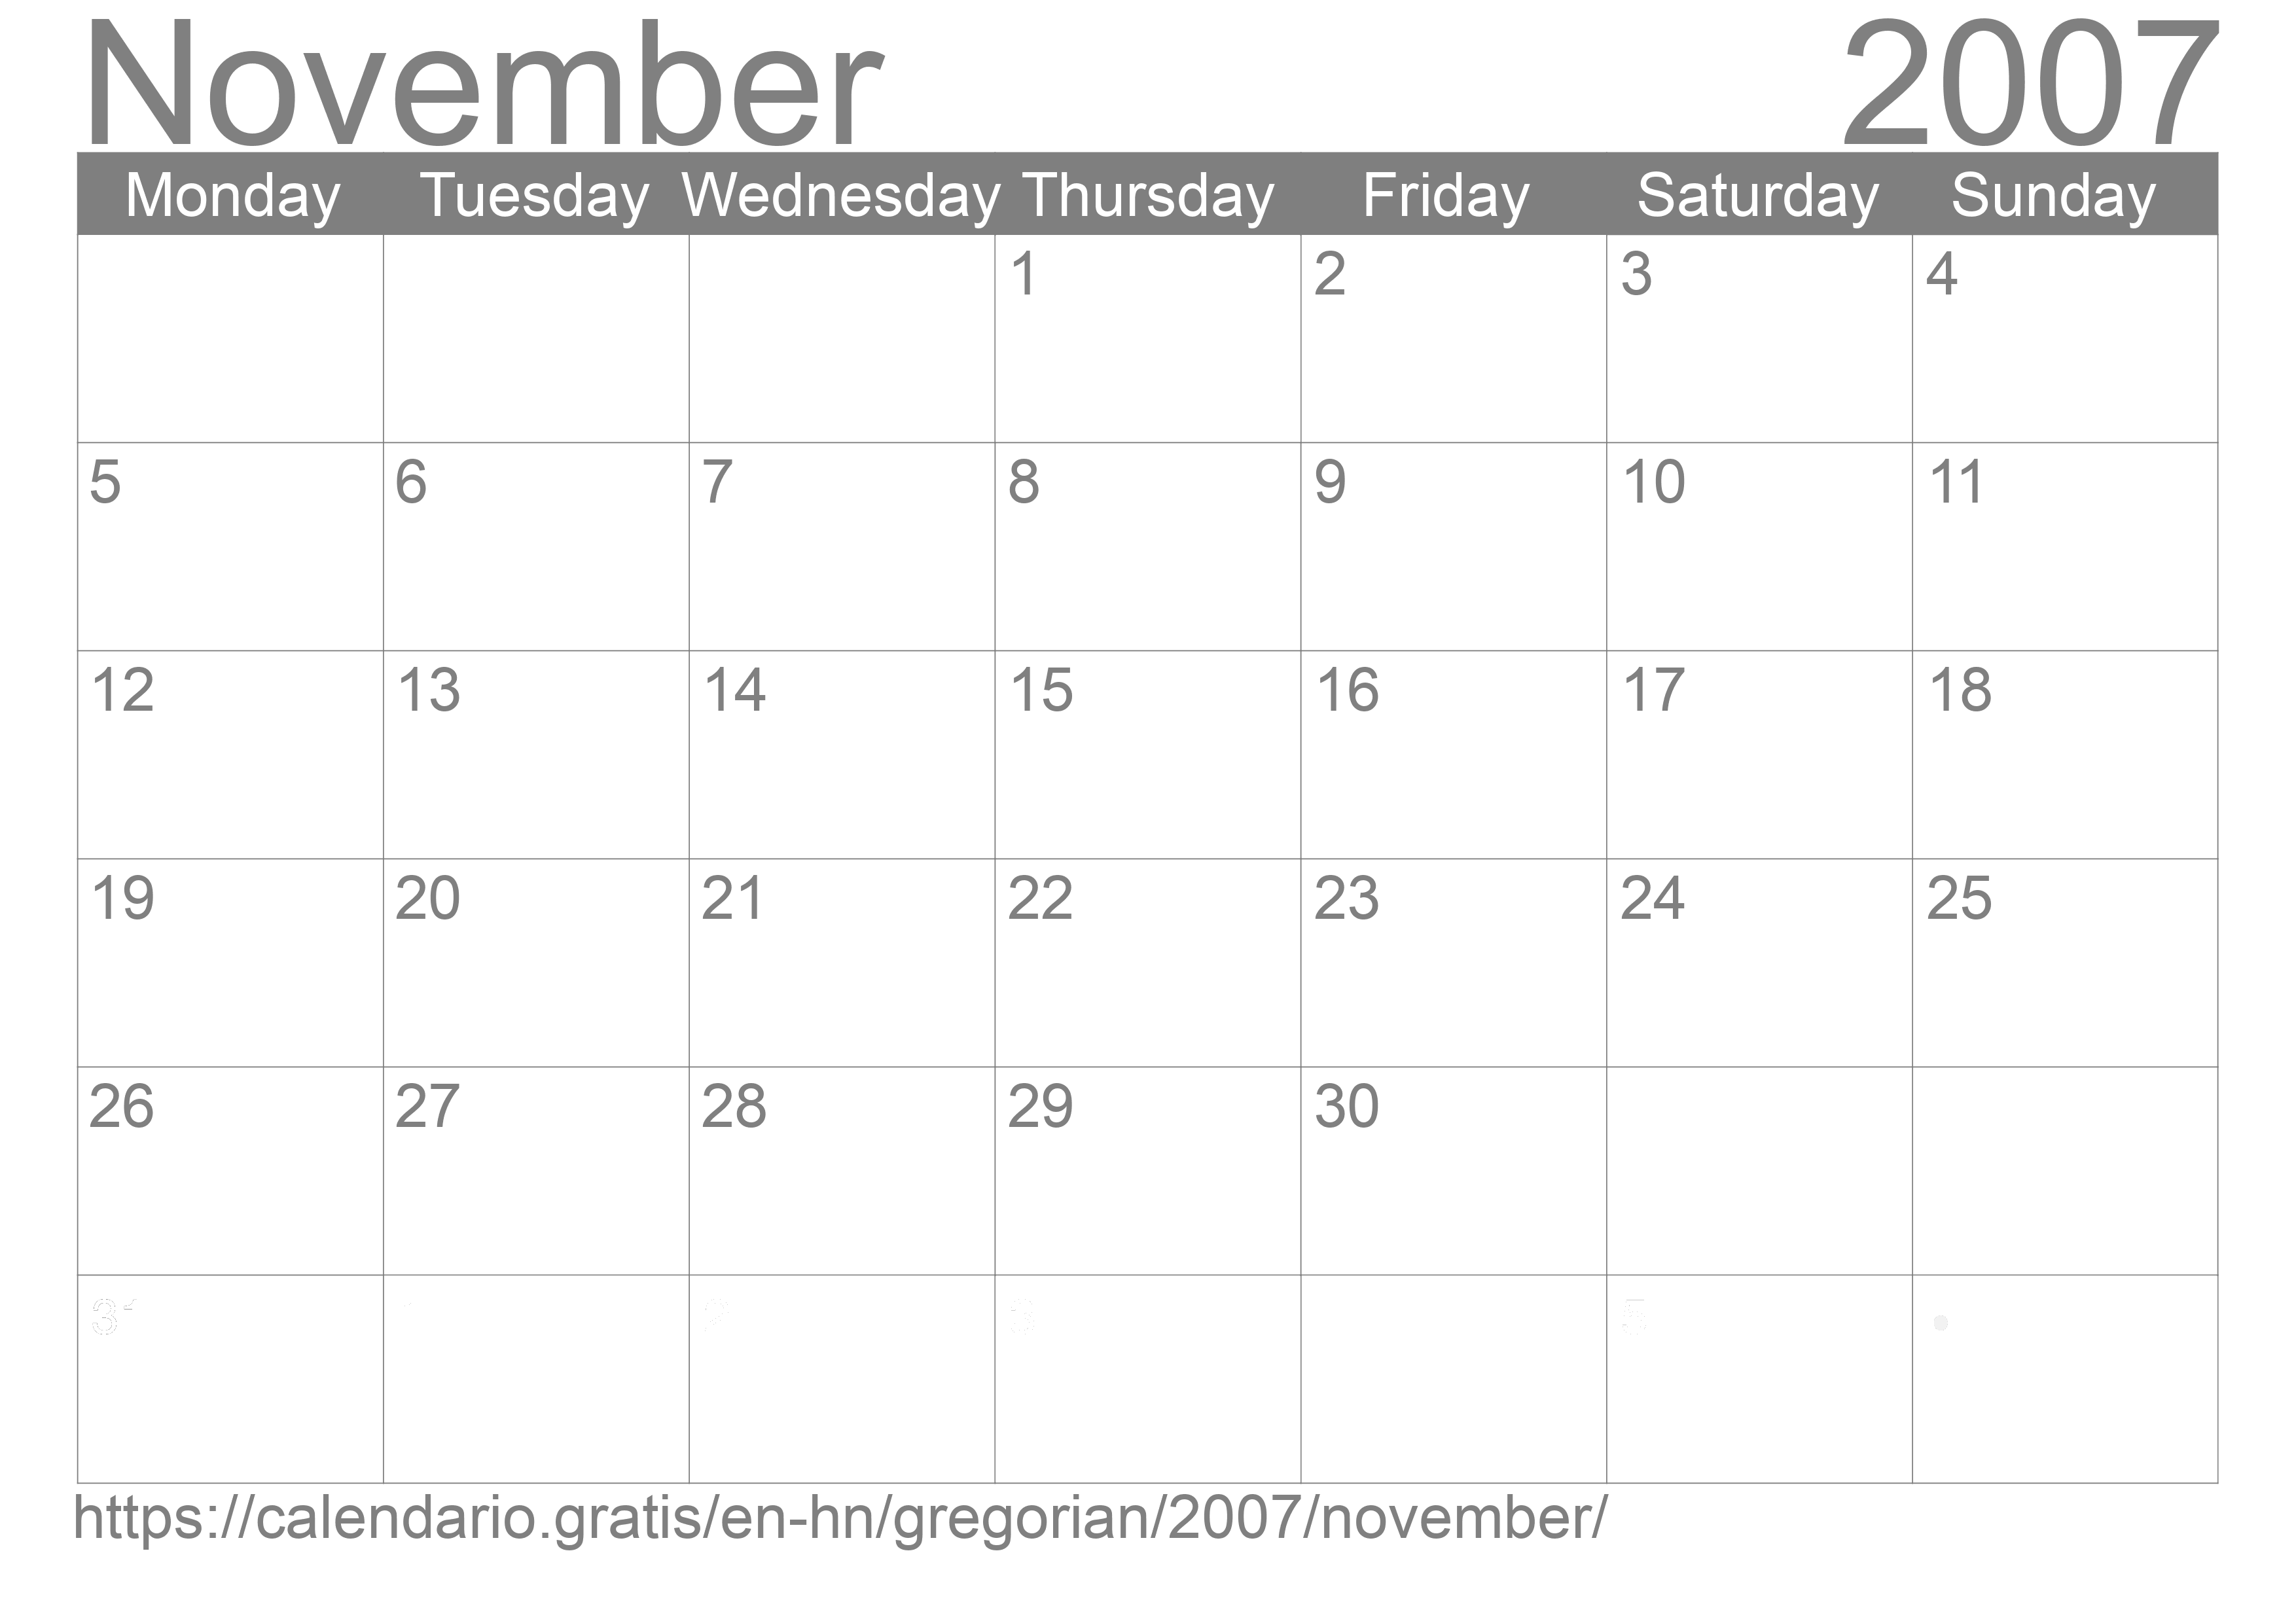 Calendar November 2007 to print